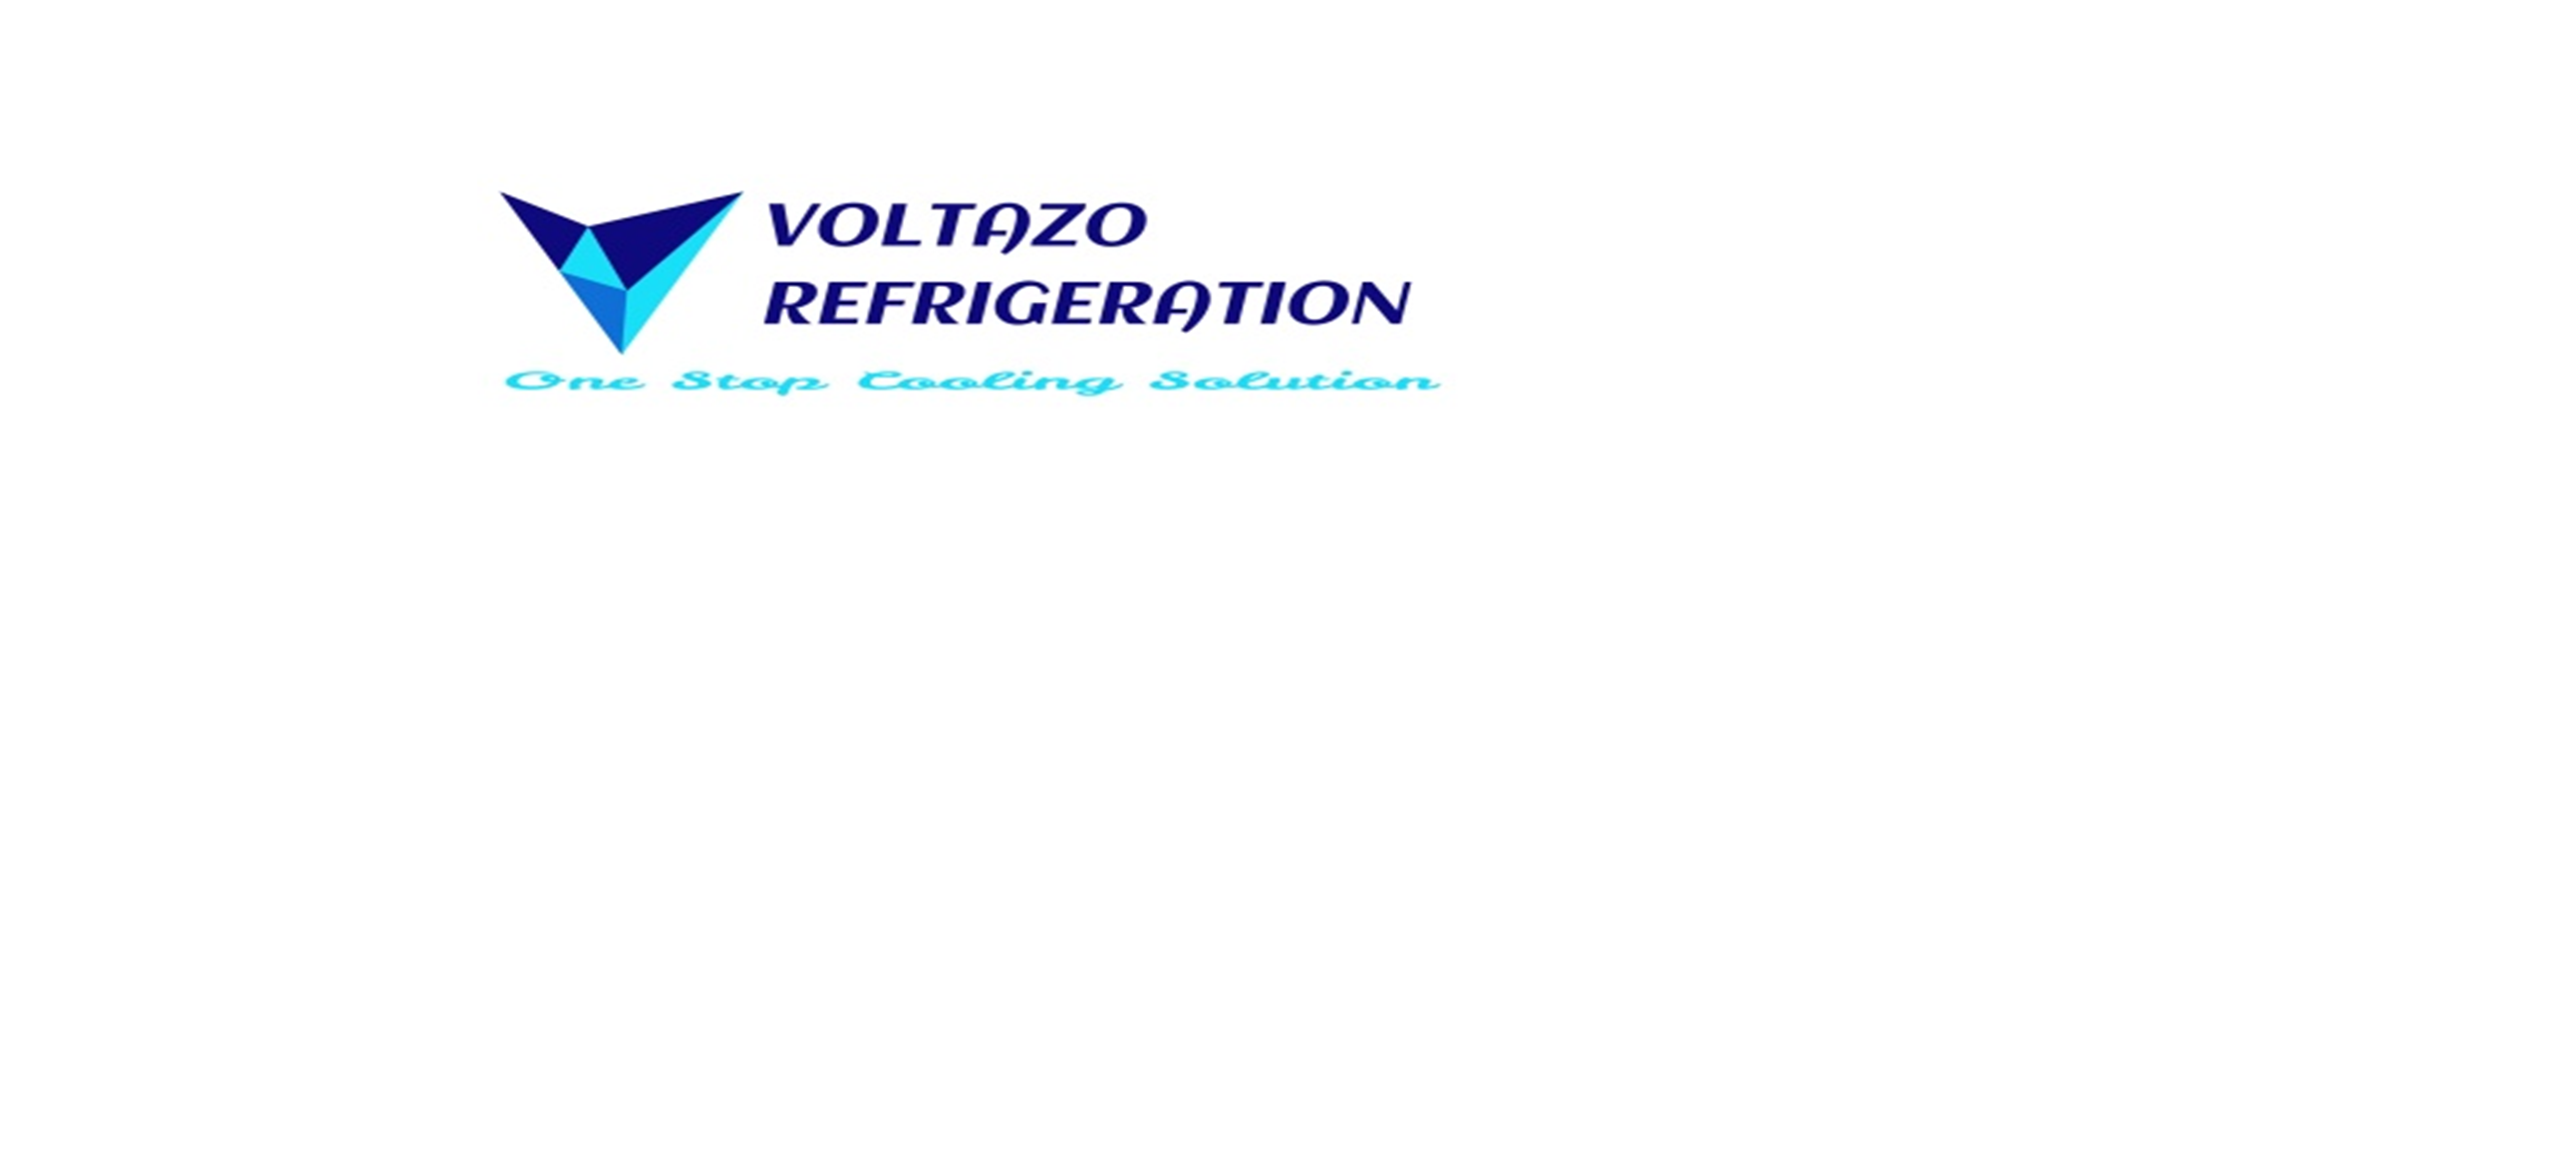 VOLTAZO REFRIGERATION